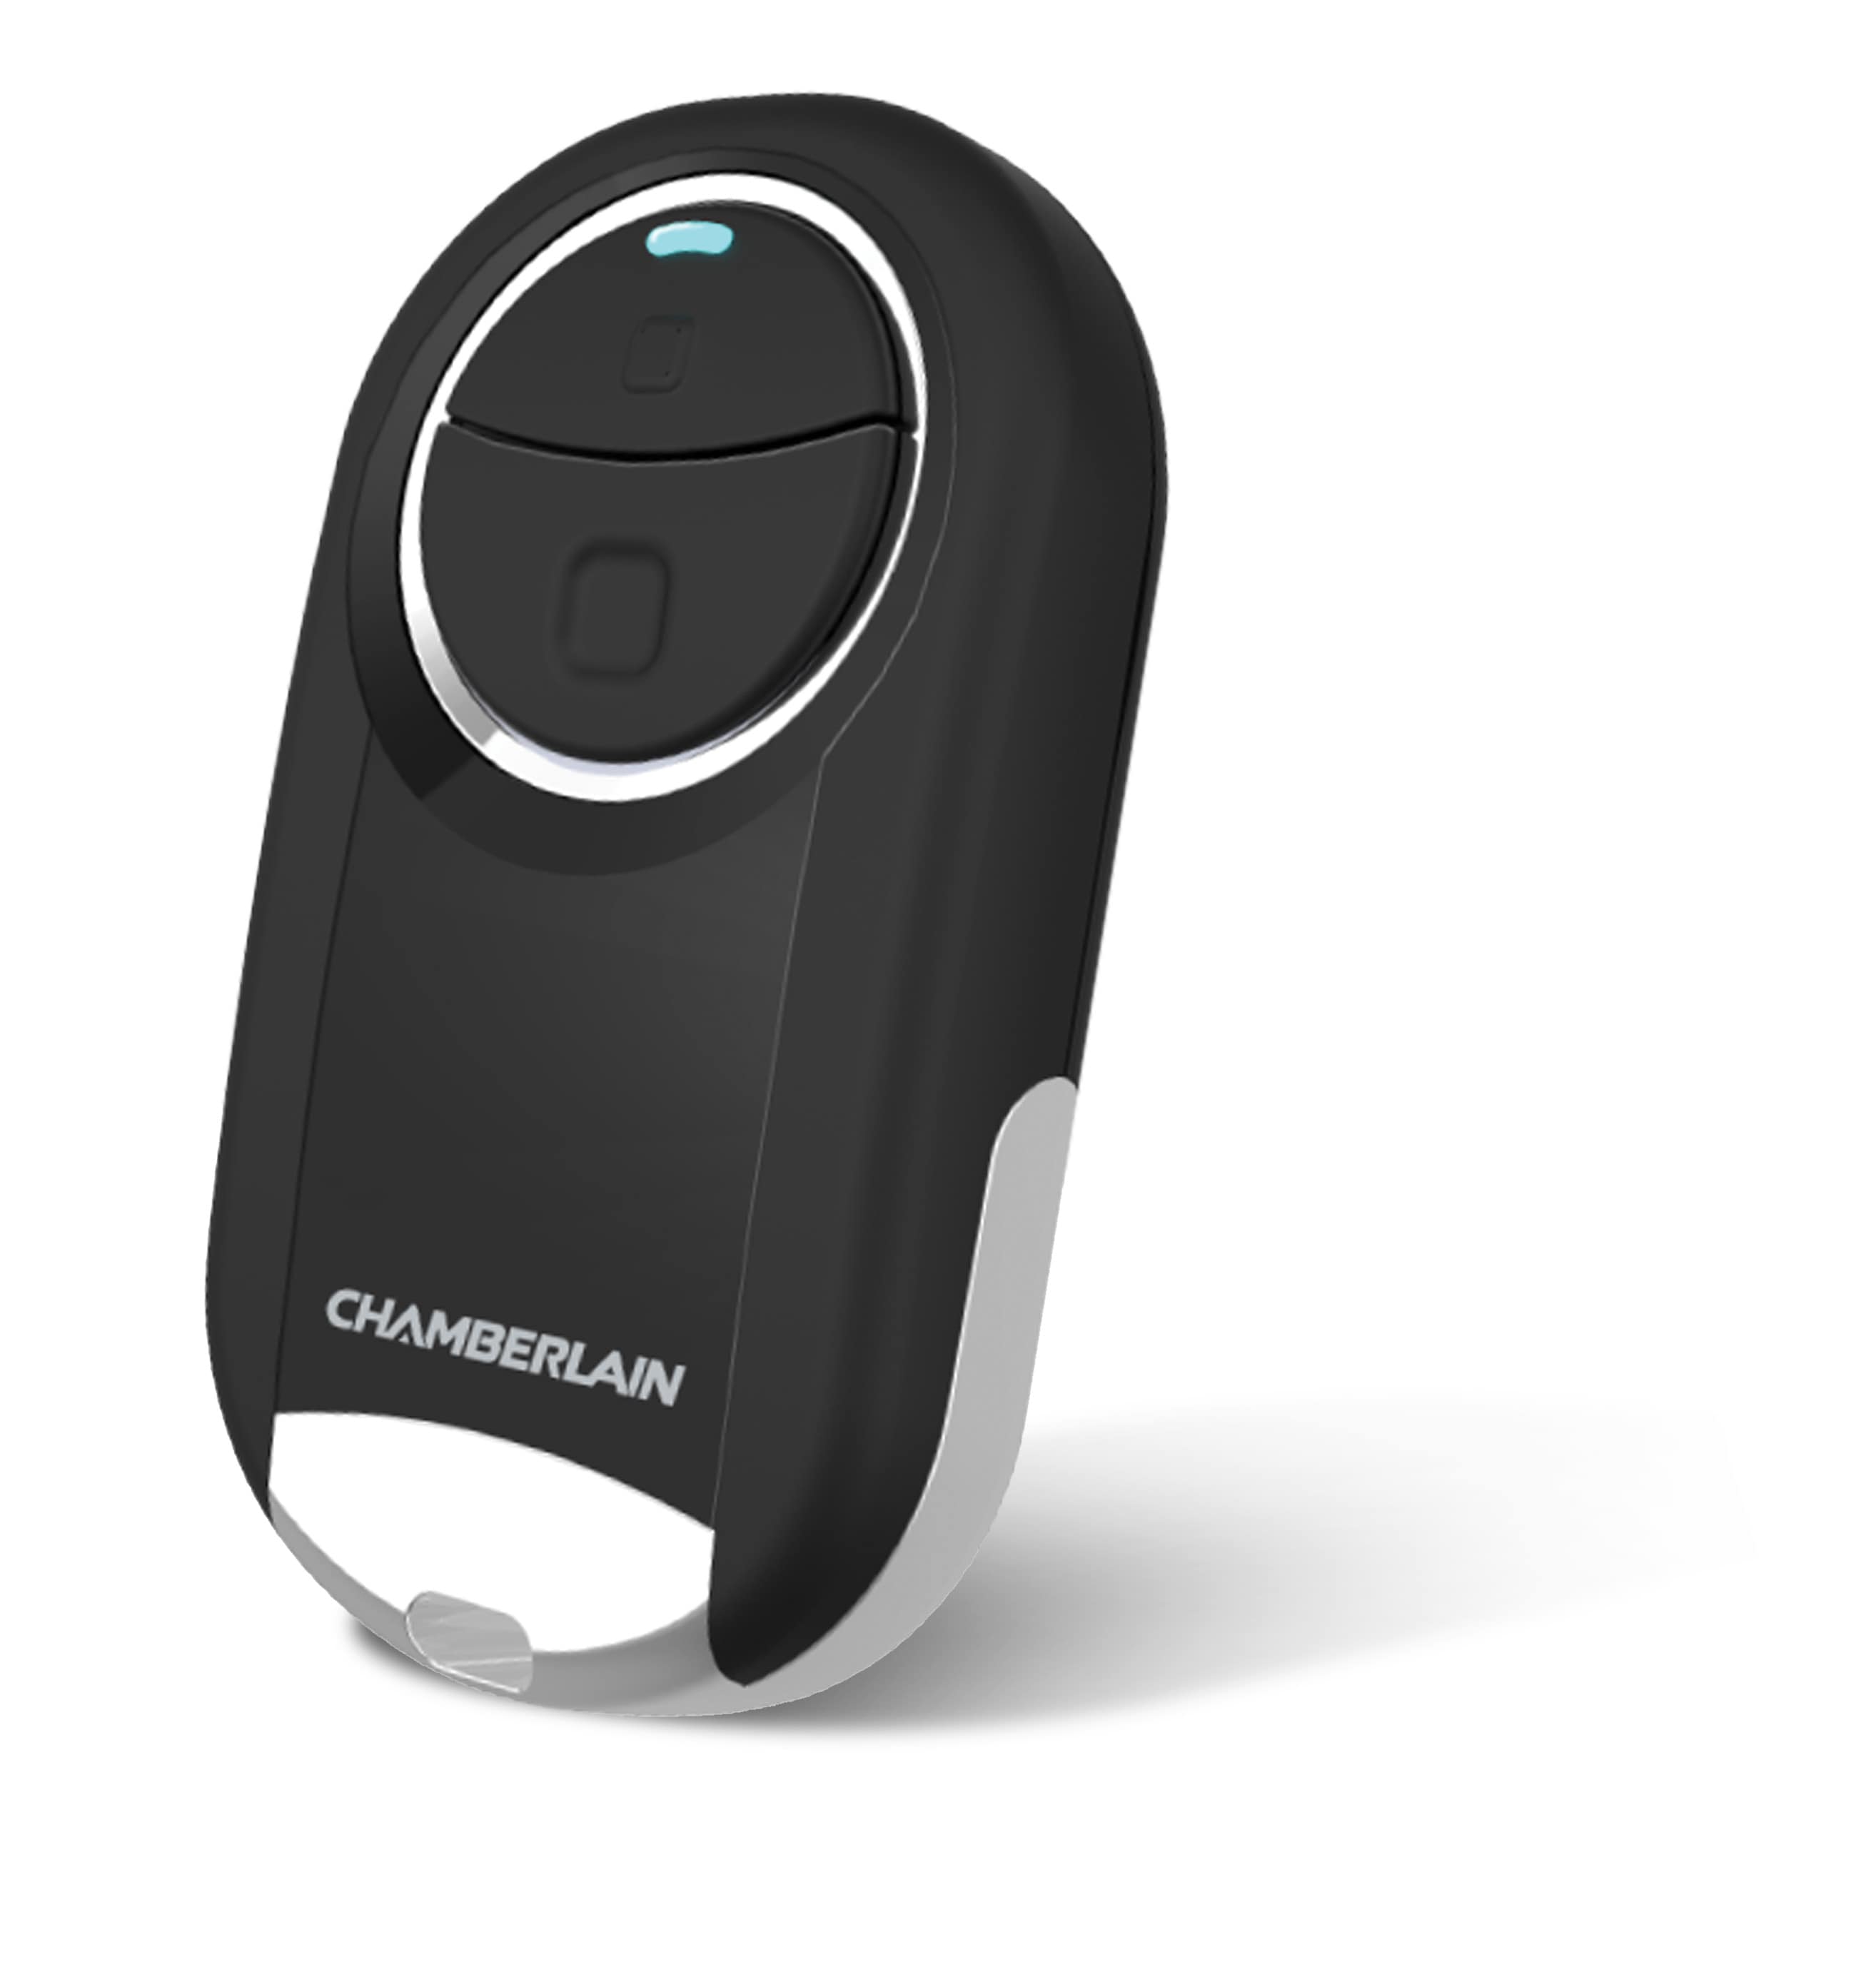 chamberlain whisper drive keypad programming